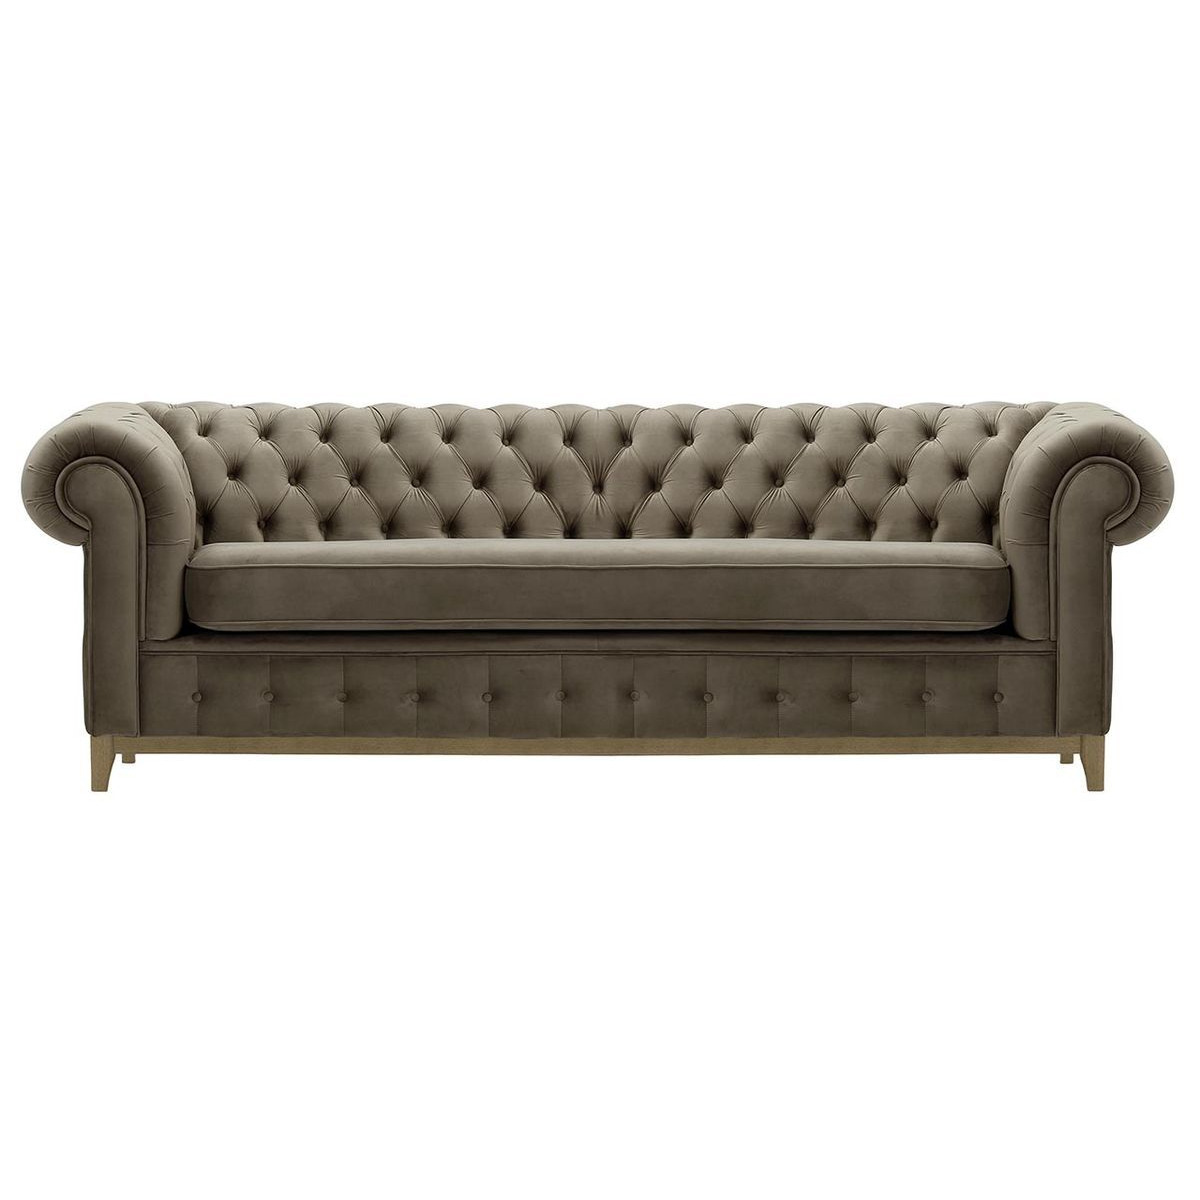 Chesterfield Grand 3 Seater Sofa, grey, Leg colour: wax black - image 1